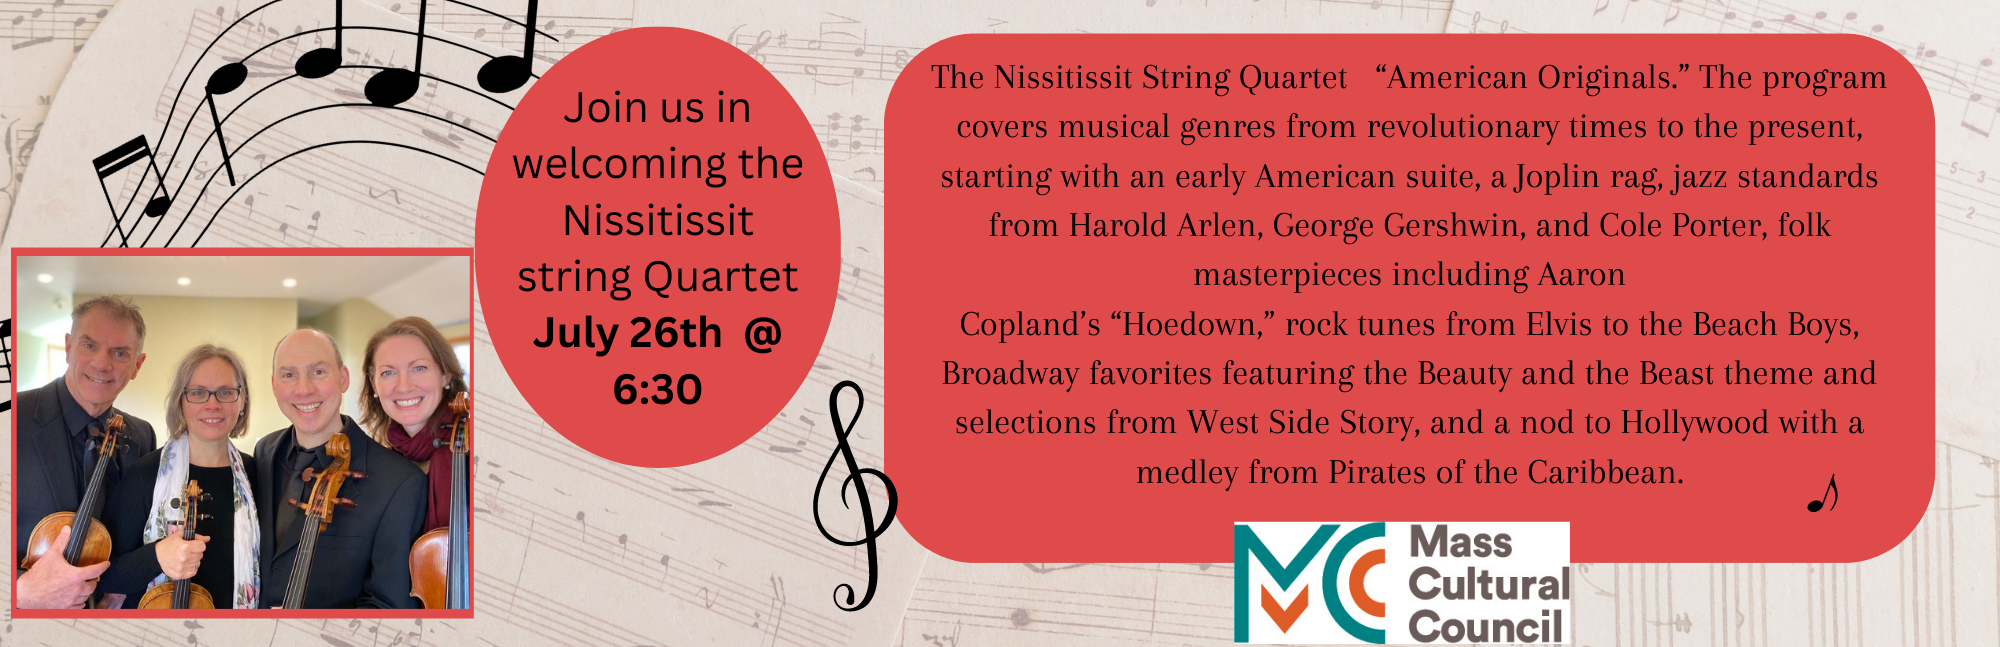 _FB The Nissitissit String Quartet